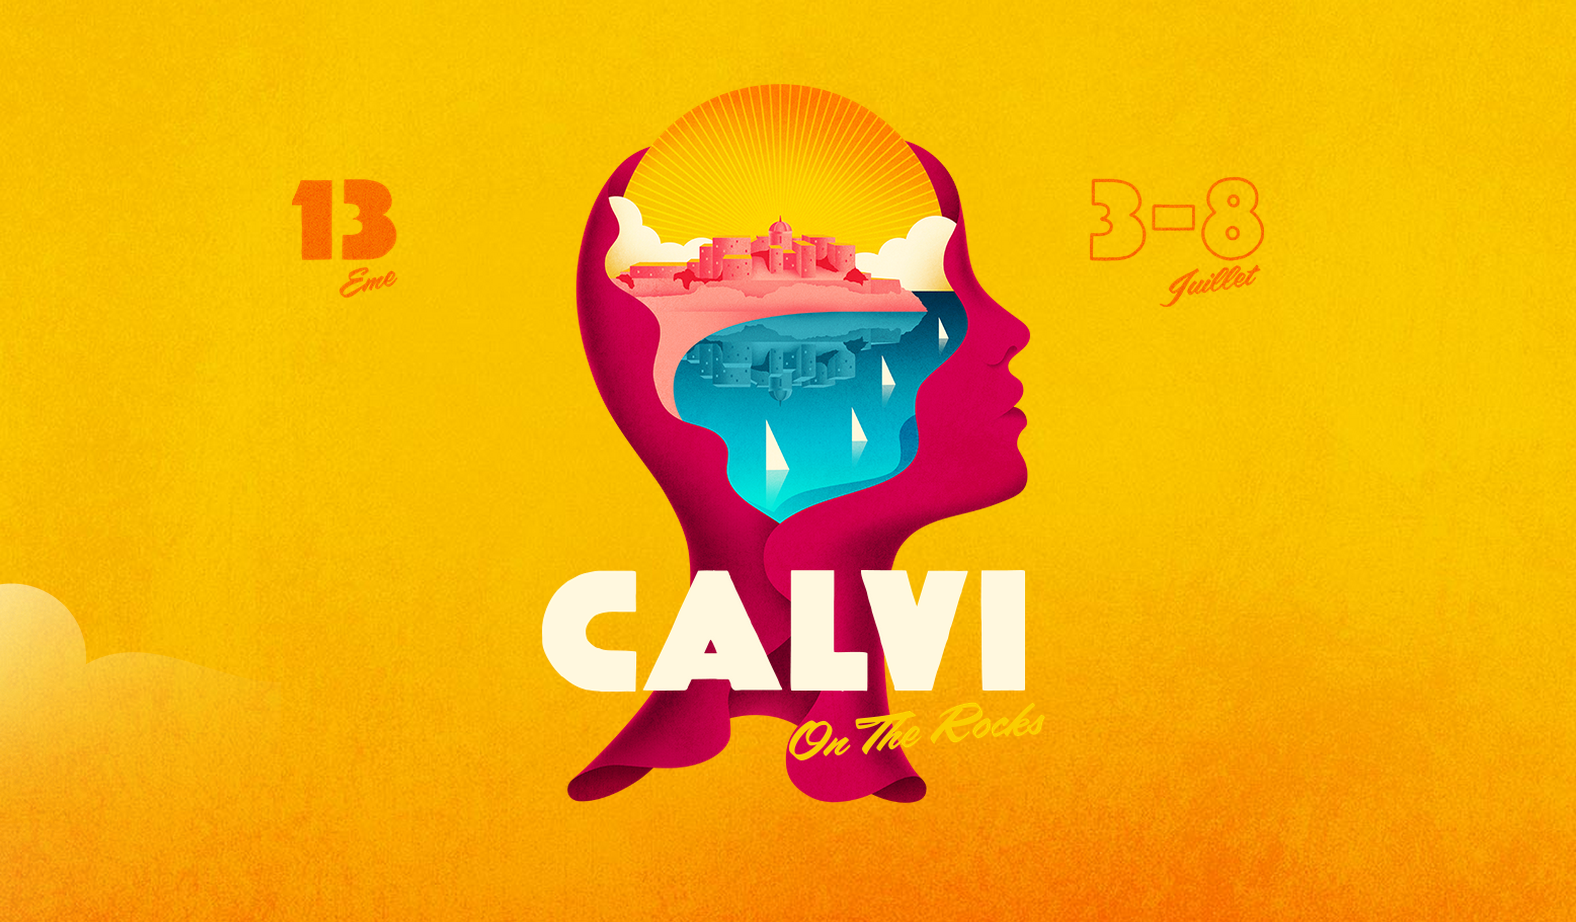 Calvi on the rocks 2015...le programme